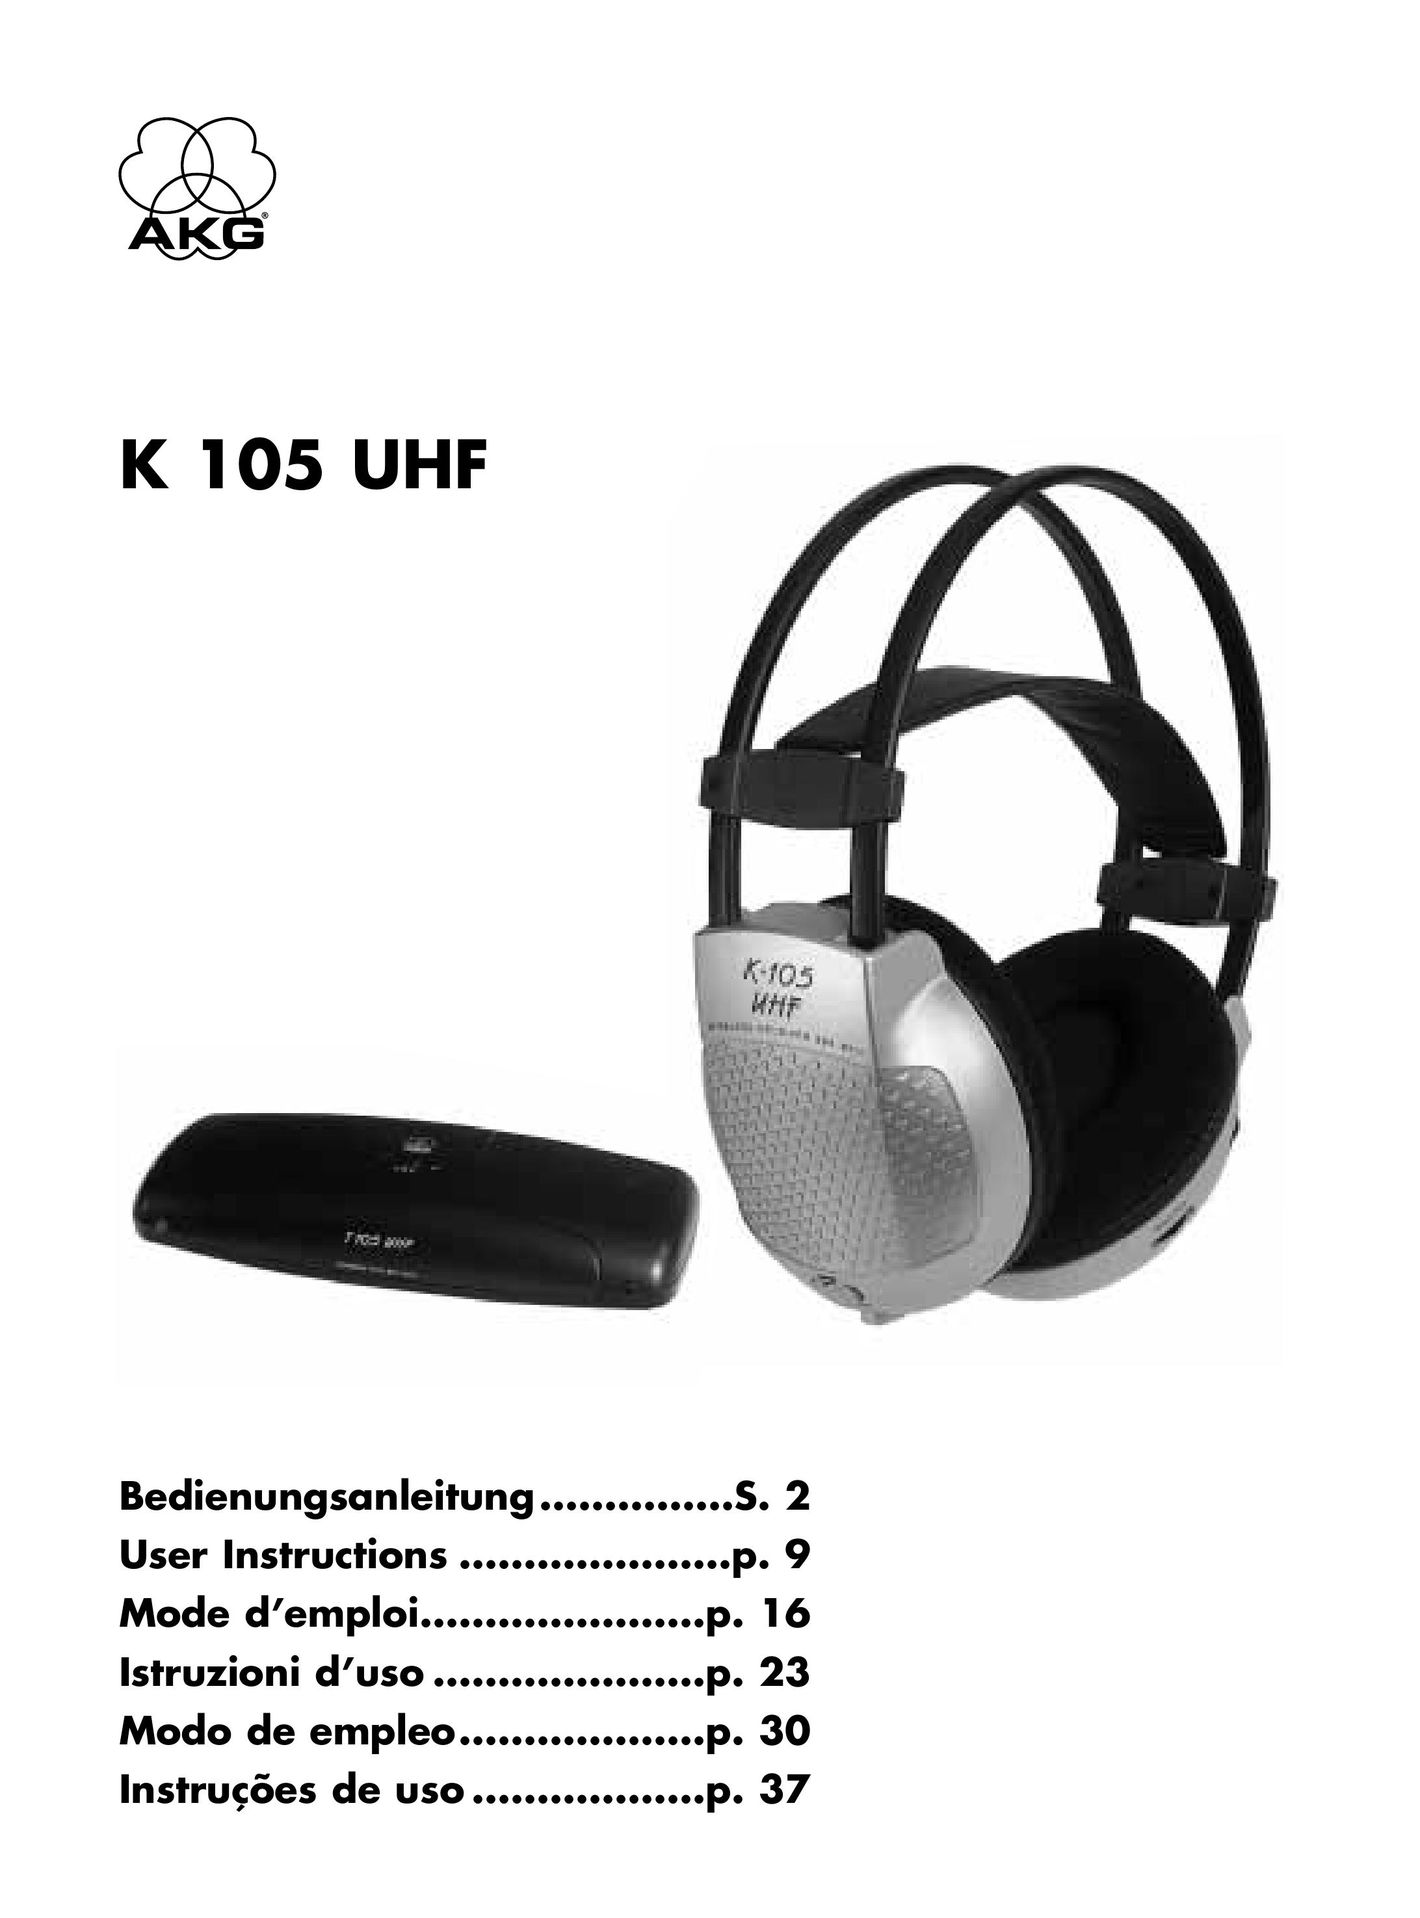 AKG Acoustics K 105 UHF Headphones User Manual